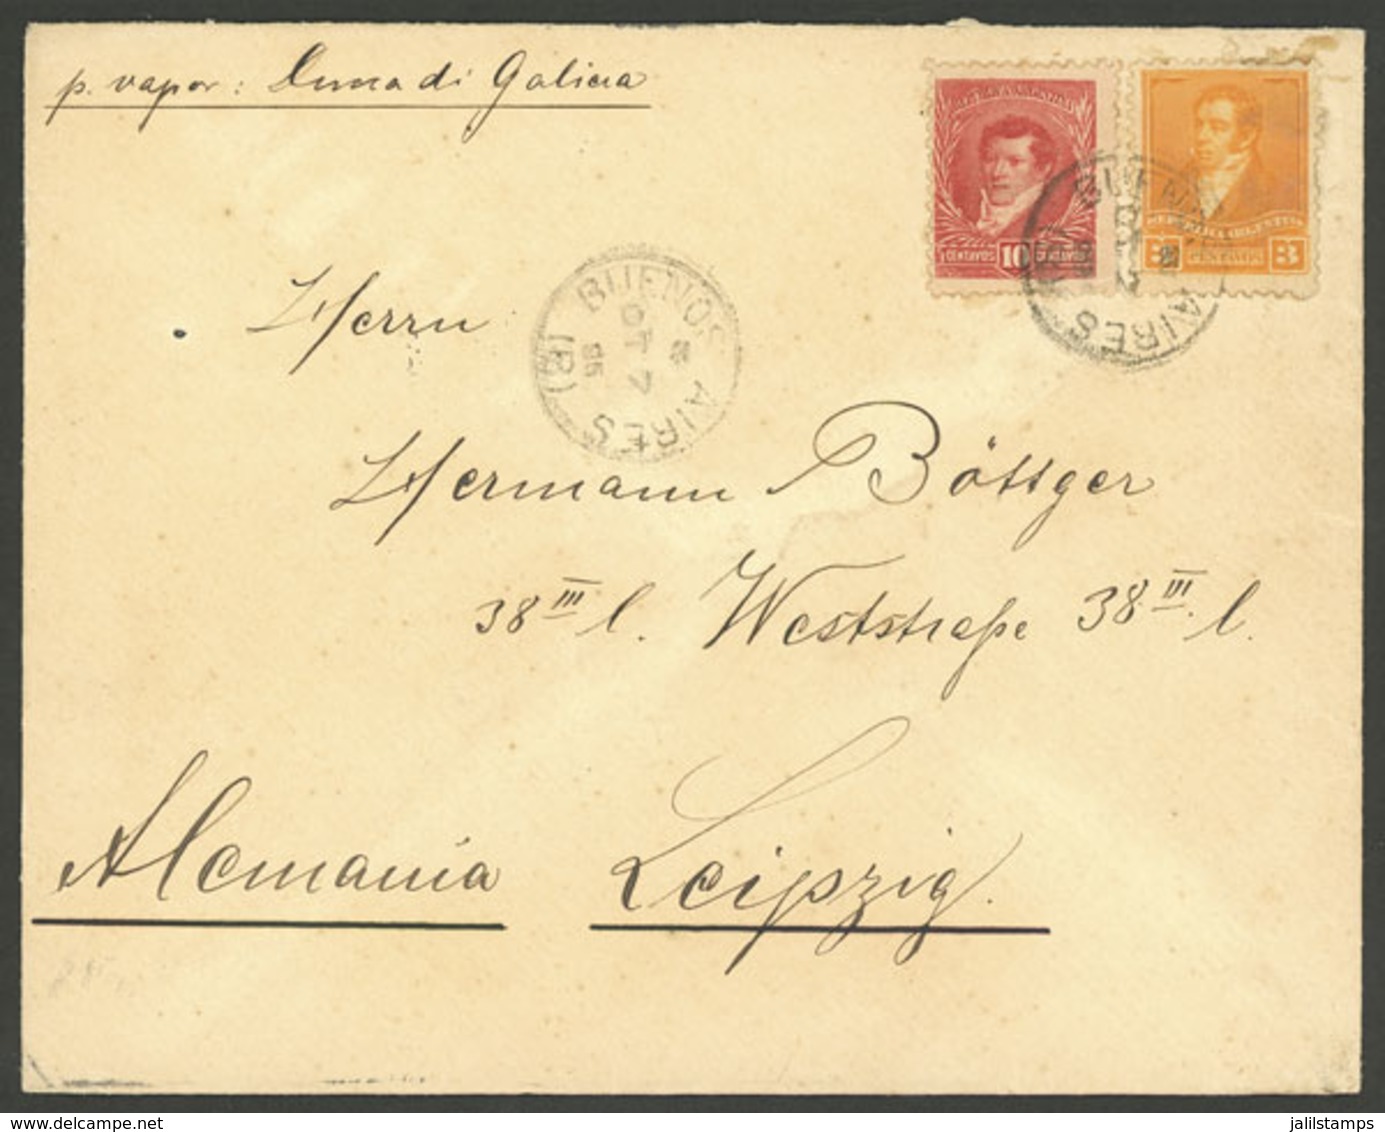 ARGENTINA: 7/OC/1896: Buenos Aires - Leipzig, Cover Franked With 13c., VF Quality - Briefe U. Dokumente